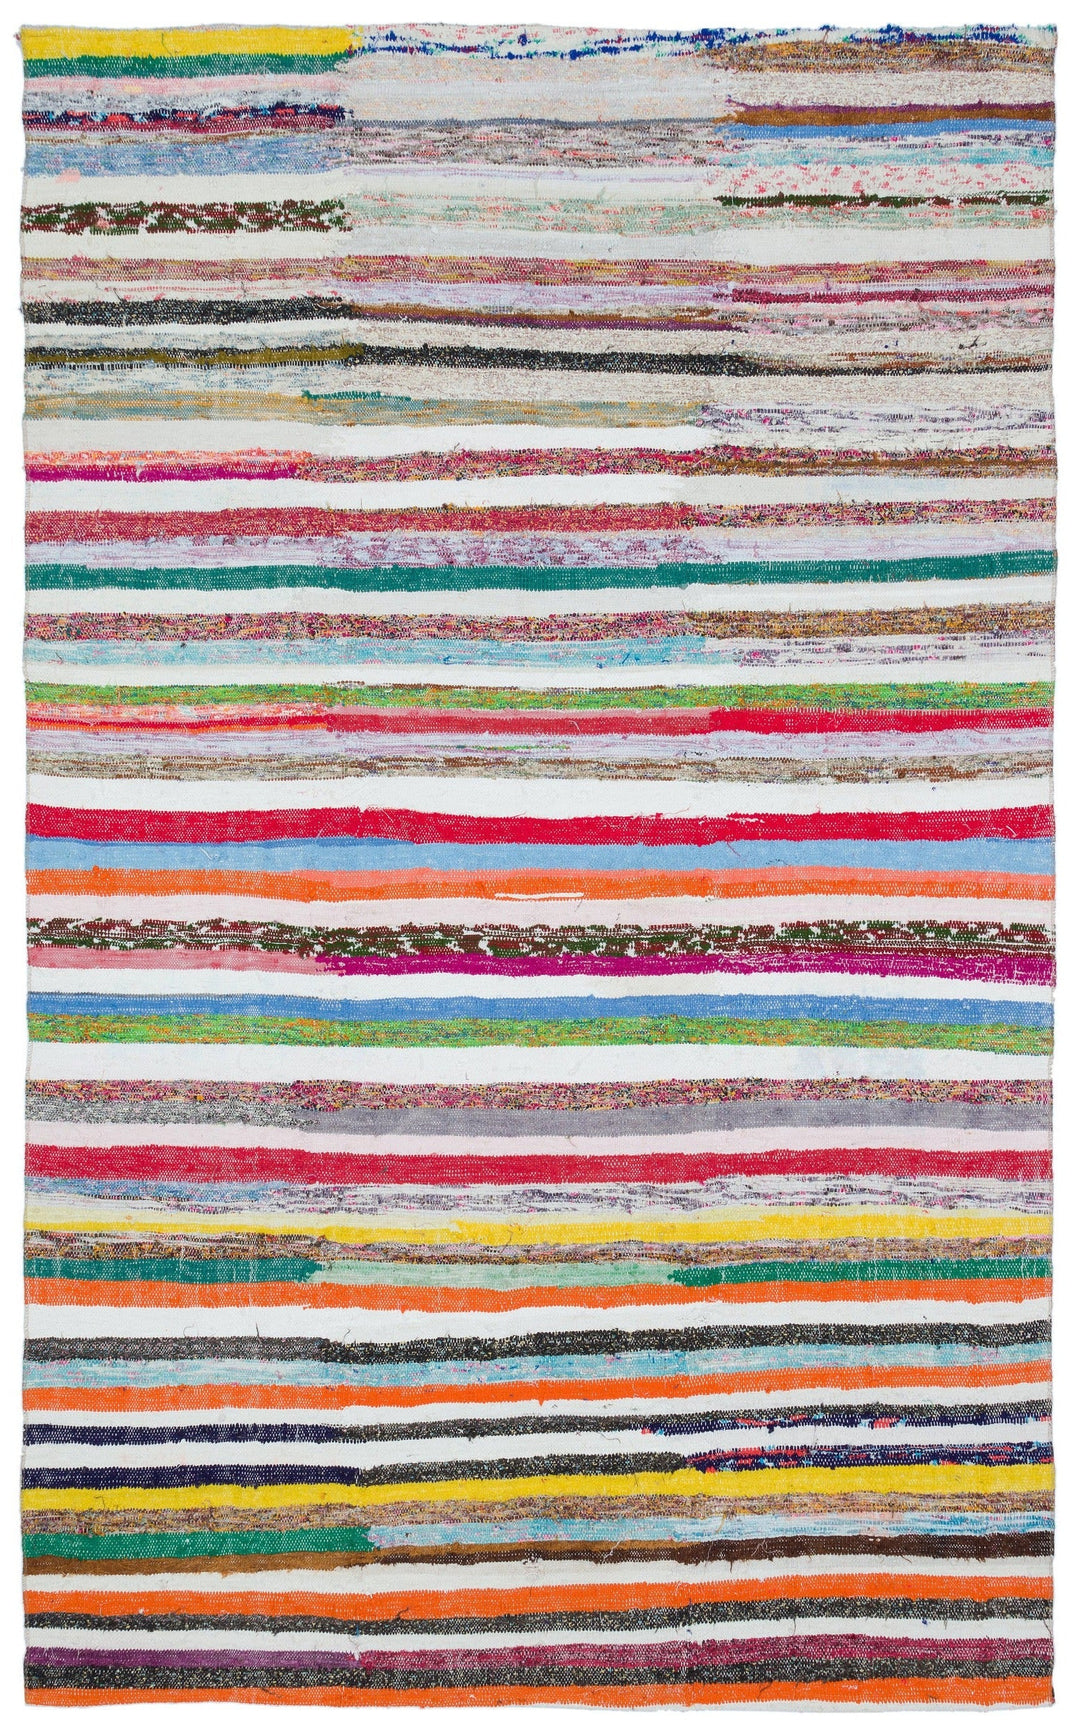 Cretan Beige Striped Wool Hand-Woven Rug 171 x 270